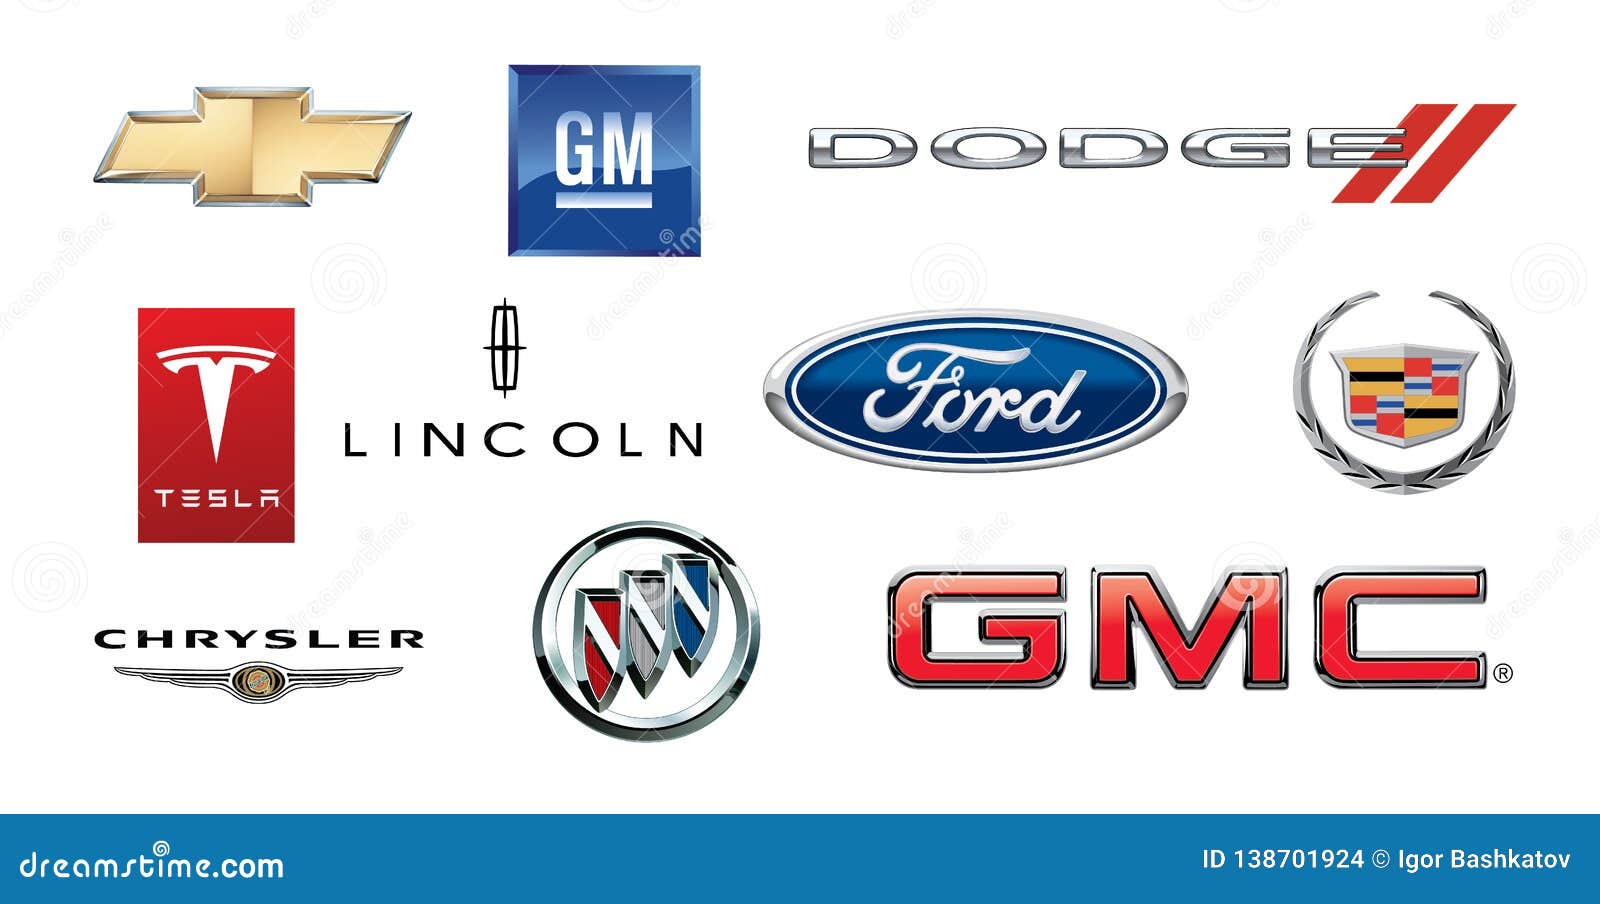 Ford Motor Company Car Chrysler Logo, cars logo brands, text